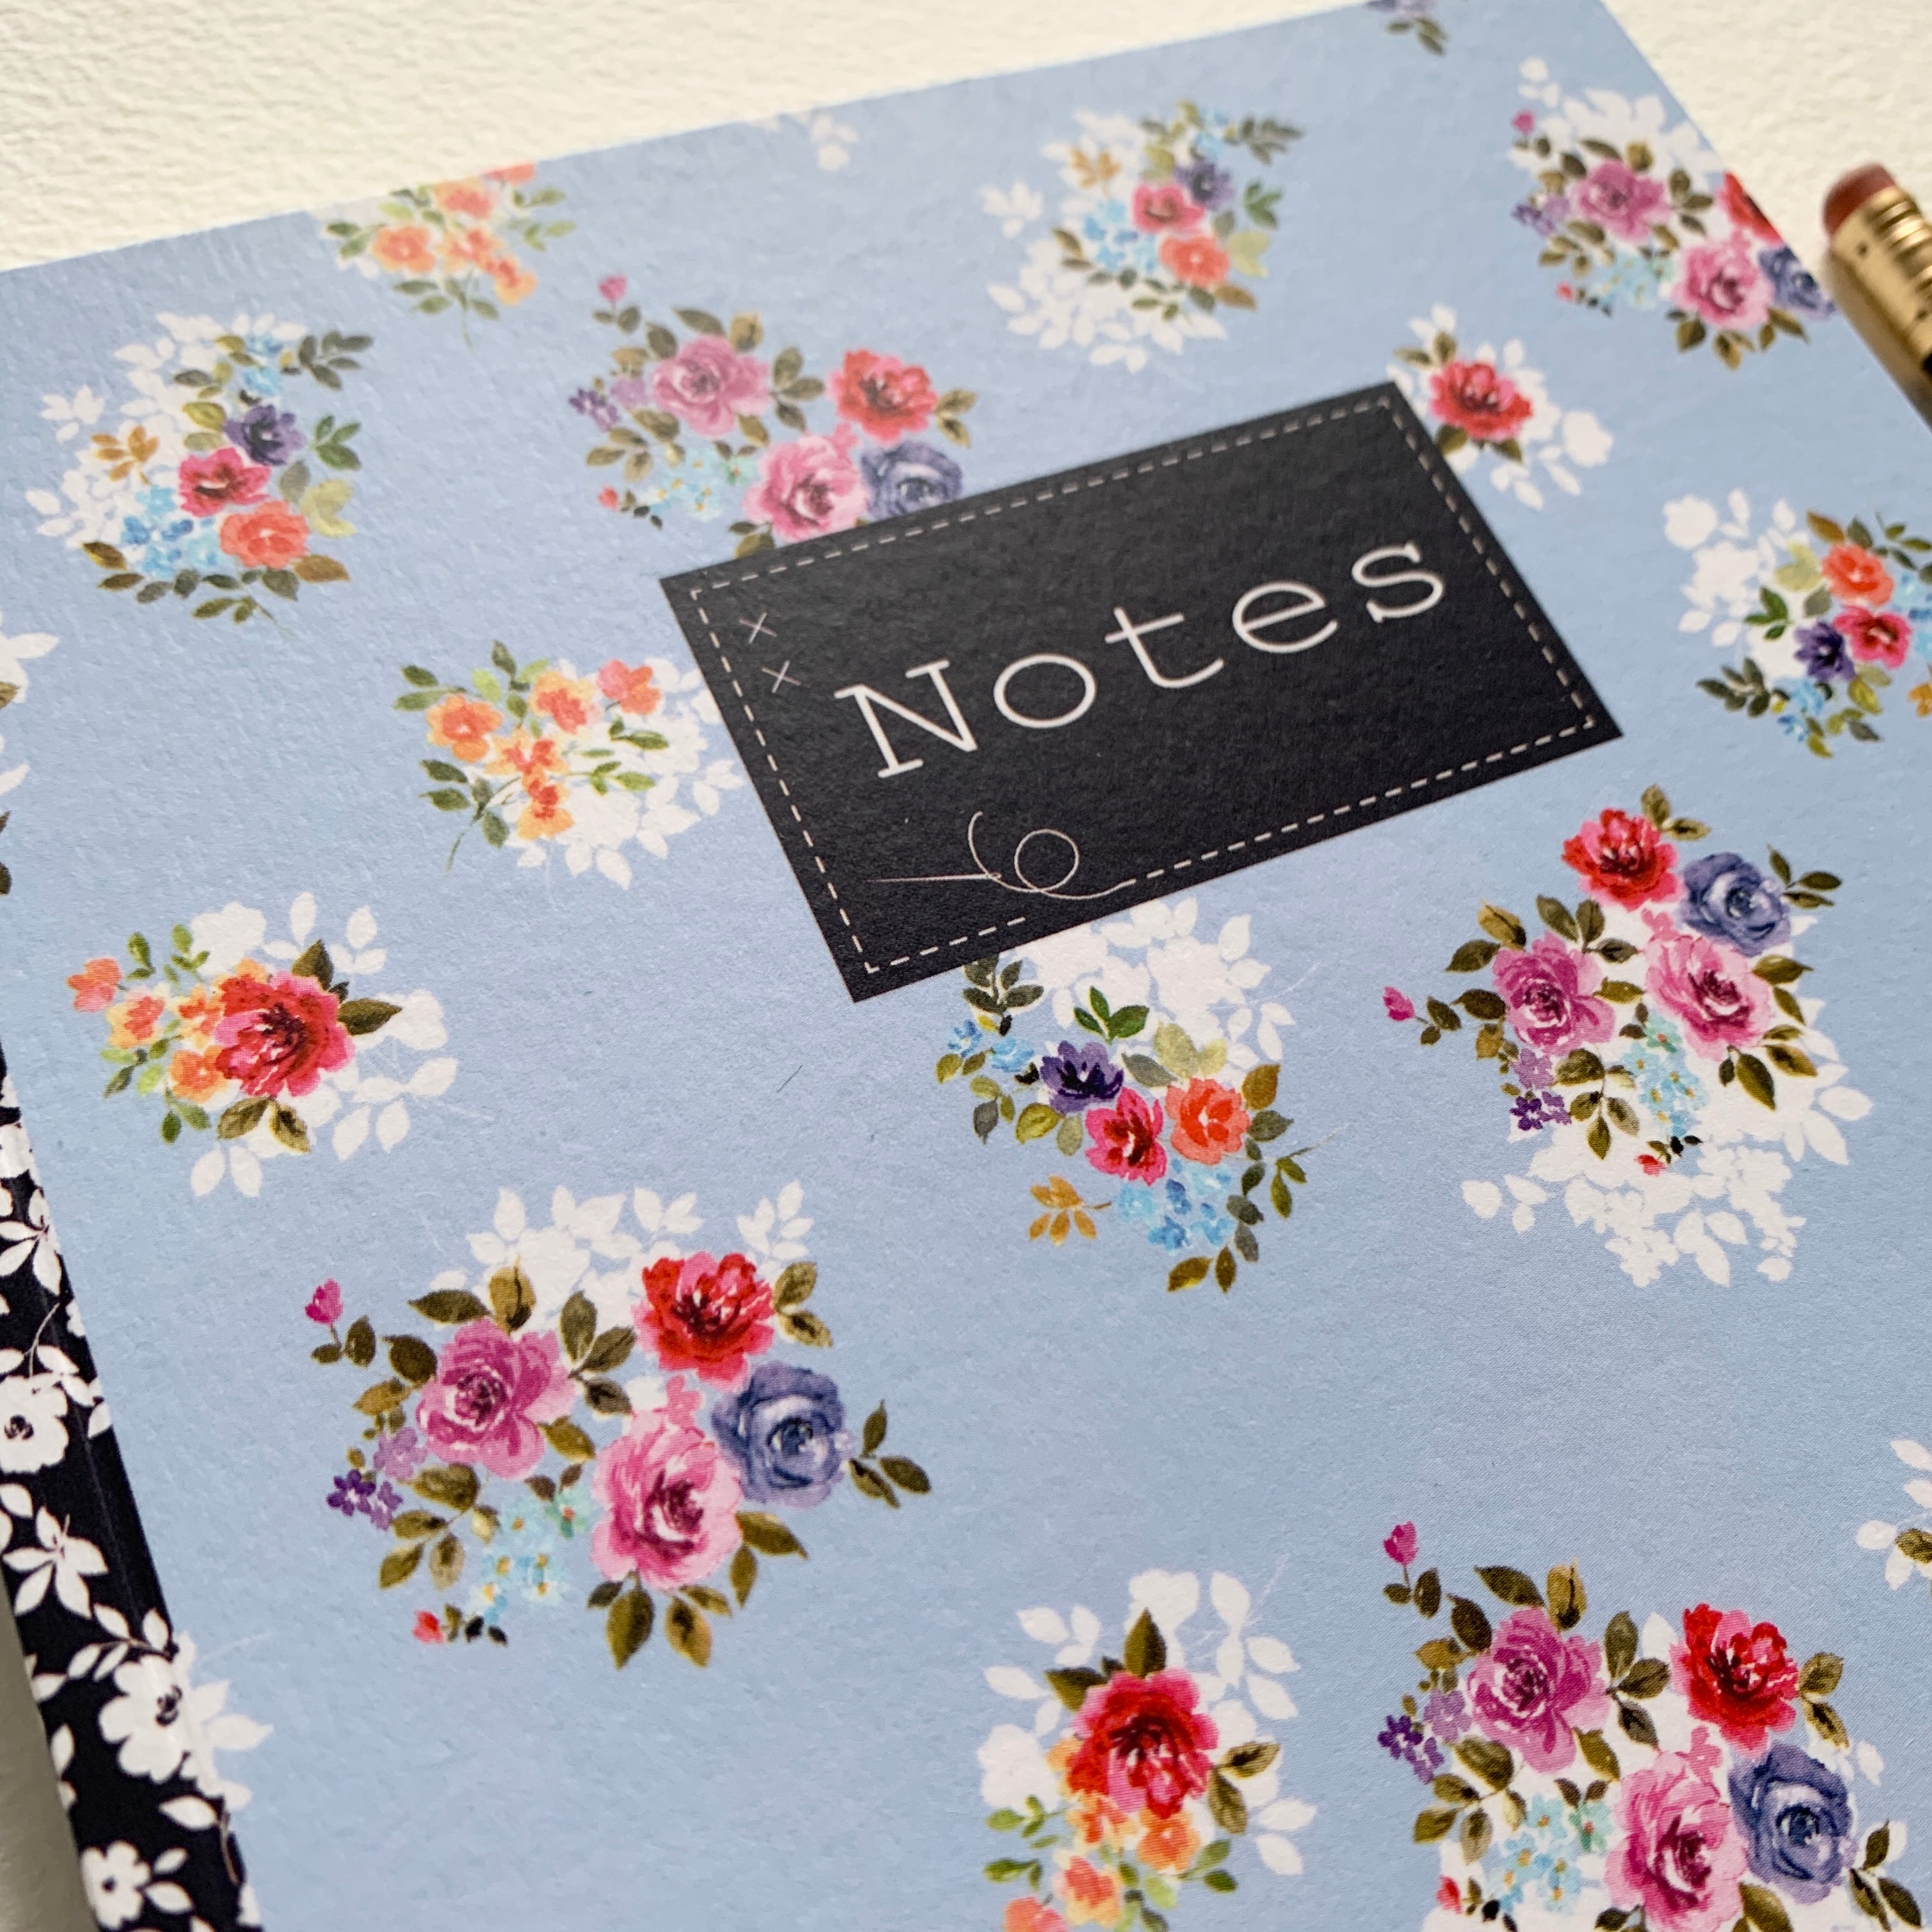 Pale blue floral notebook